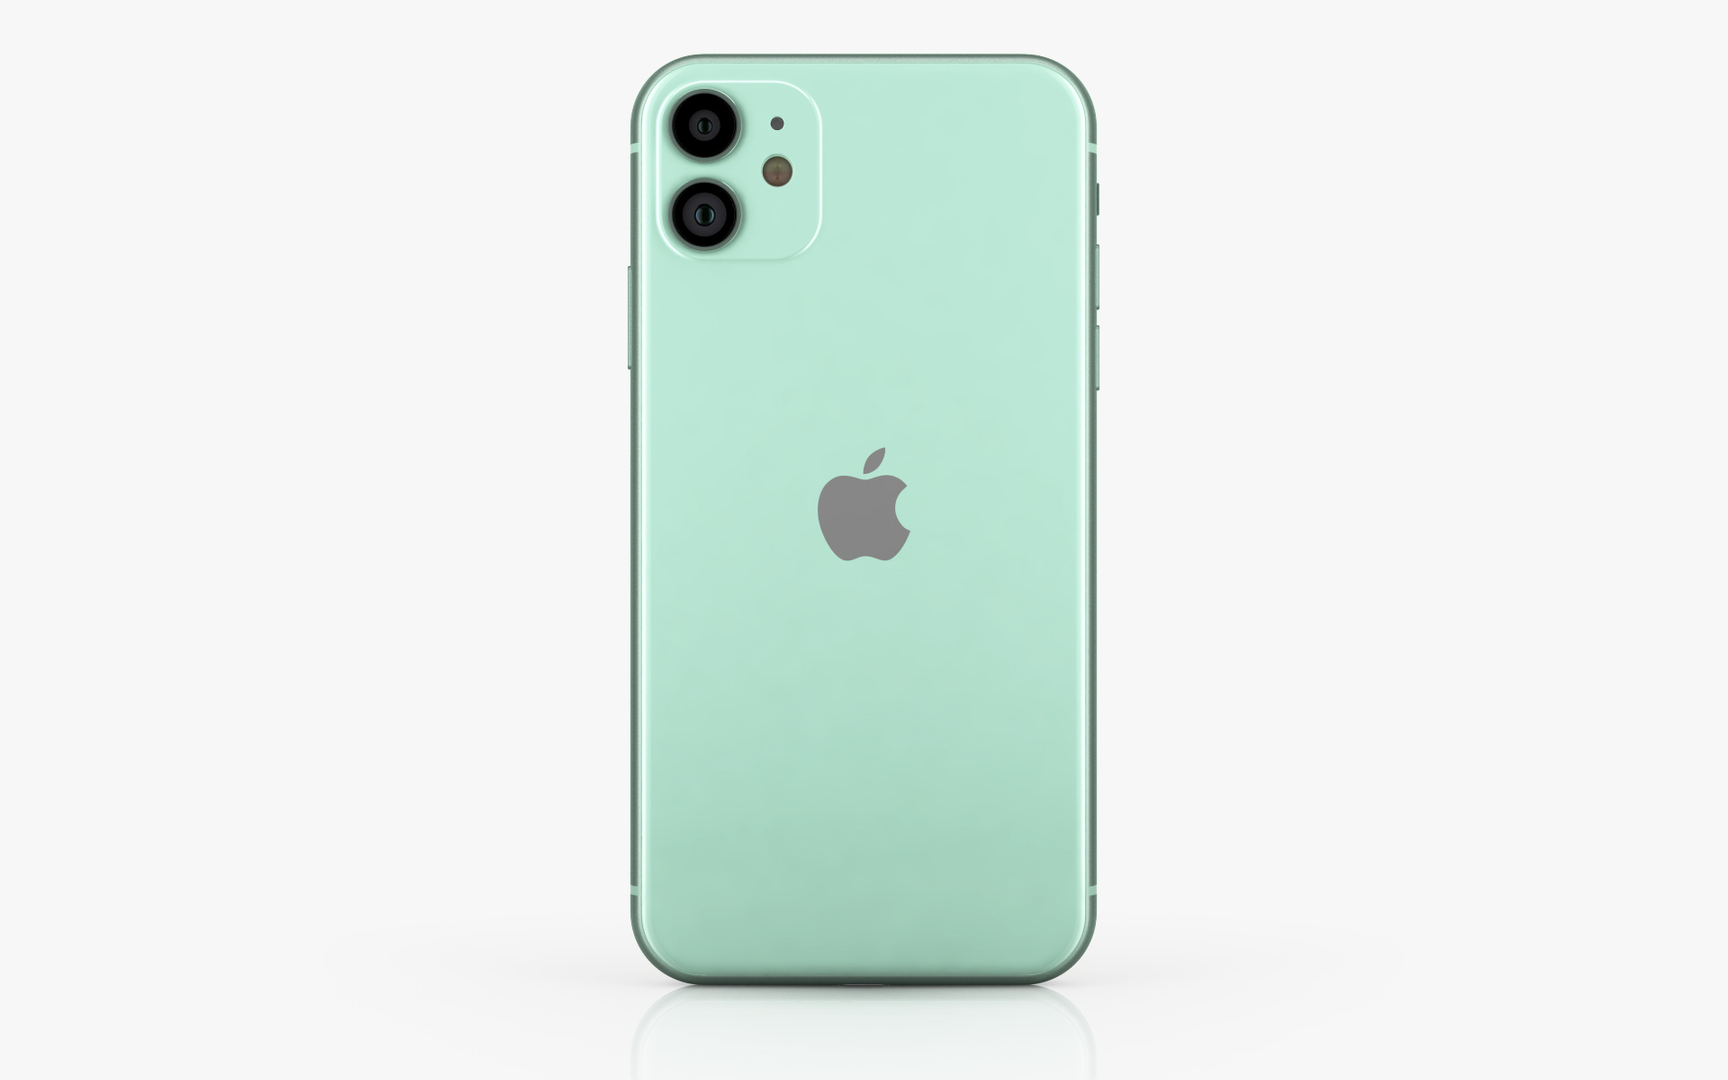 apple iphone 11 color model https://p.turbosquid.com/ts-thumb/7g/G5nufe/TQJXliUw/iphone11_green/jpg/1568922984/1920x1080/turn_fit_q99/4afcc0586661709c0b356c03fe32793b6ee155fe/iphone11_green-1.jpg